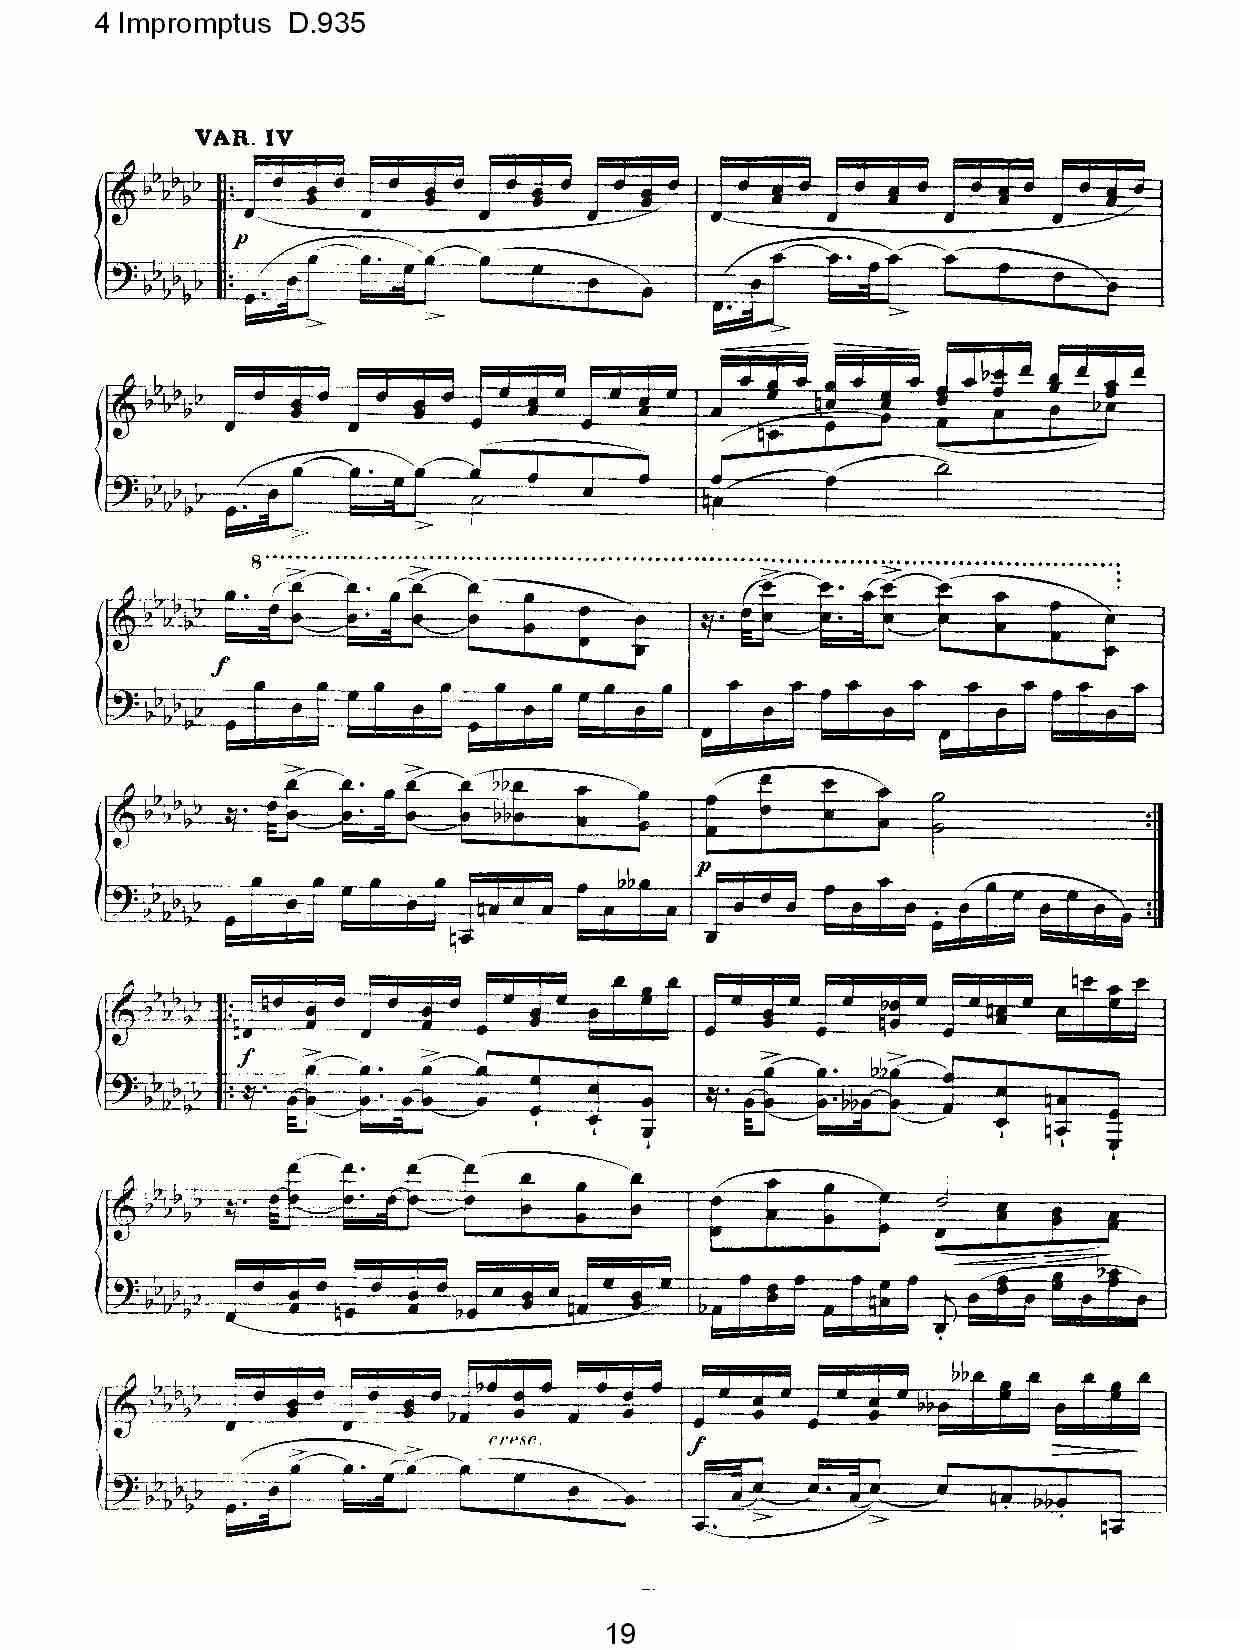 4 Impromptus D.935（4人即兴演奏D.935）钢琴曲谱（图19）